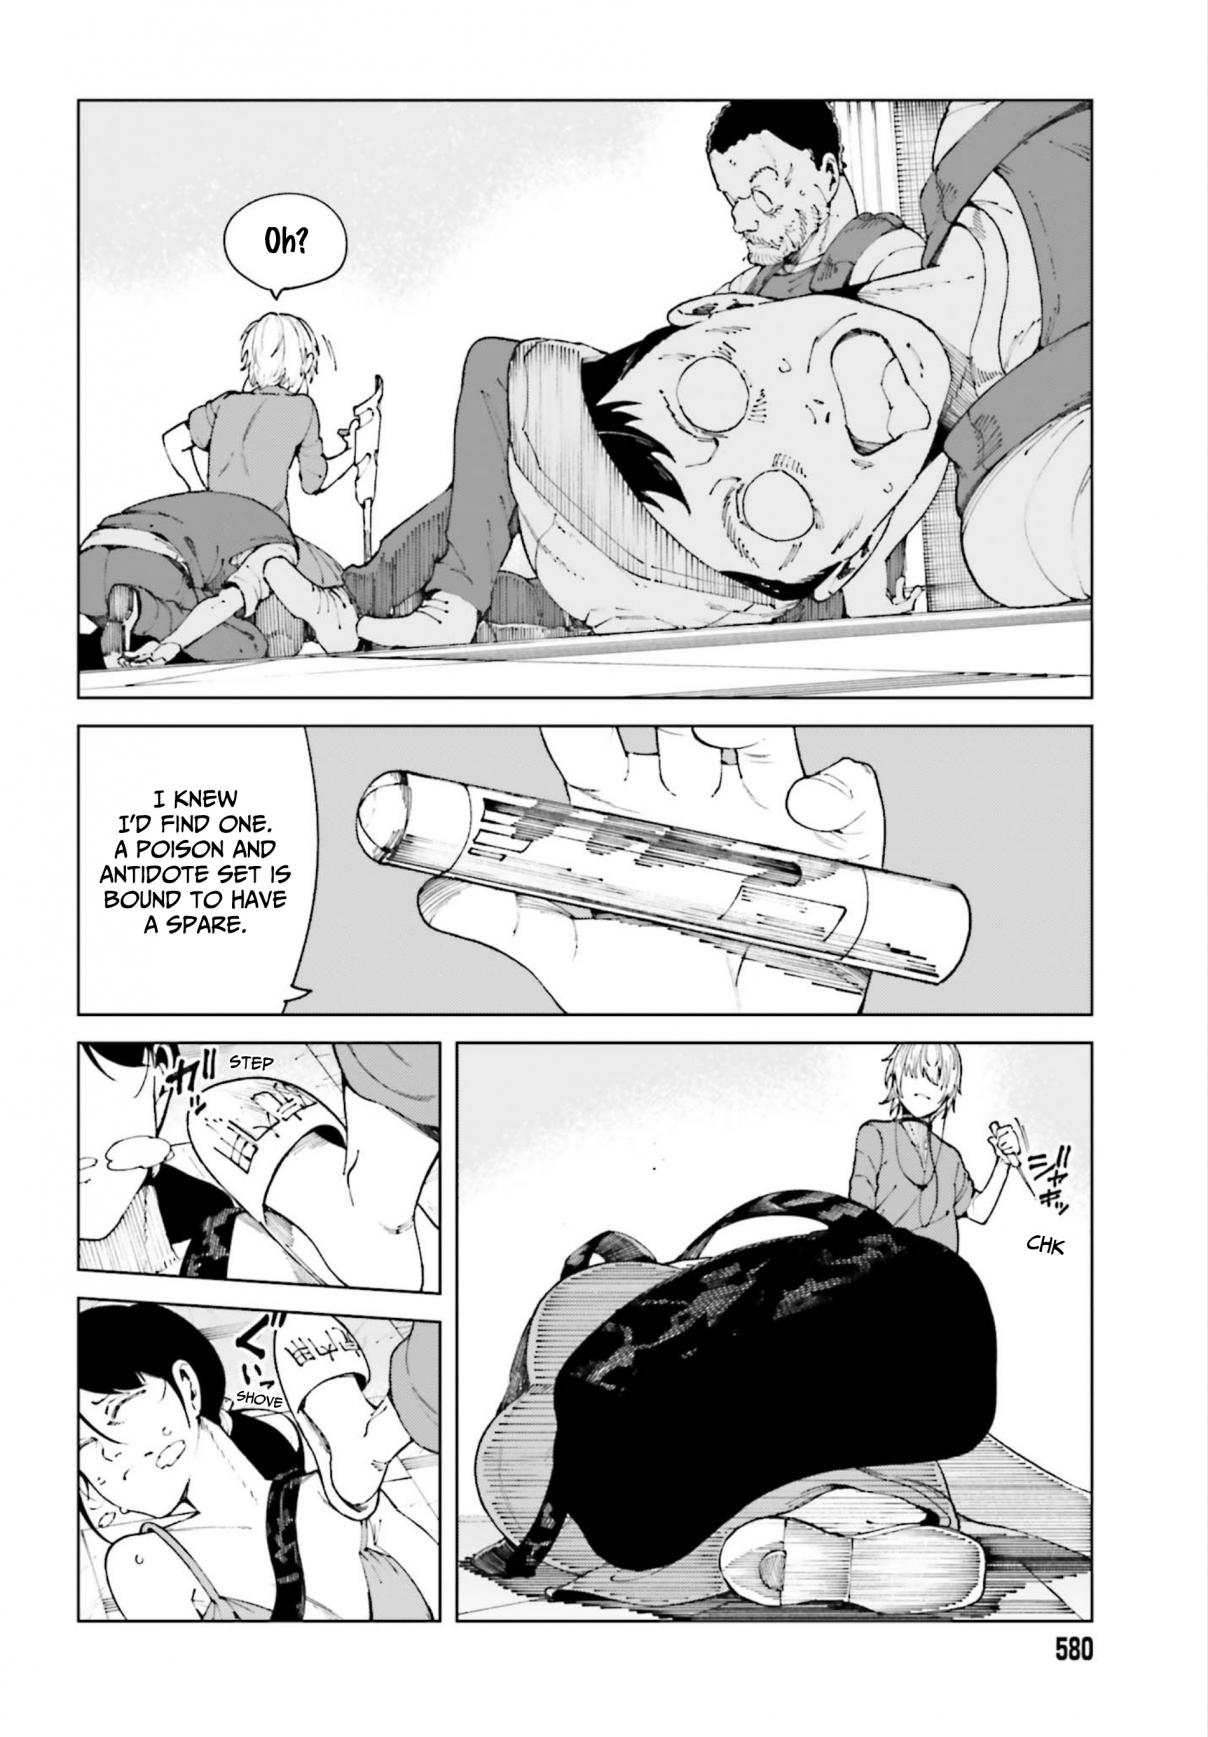 Toaru Kagaku no Accelerator Vol. 10 Ch. 53